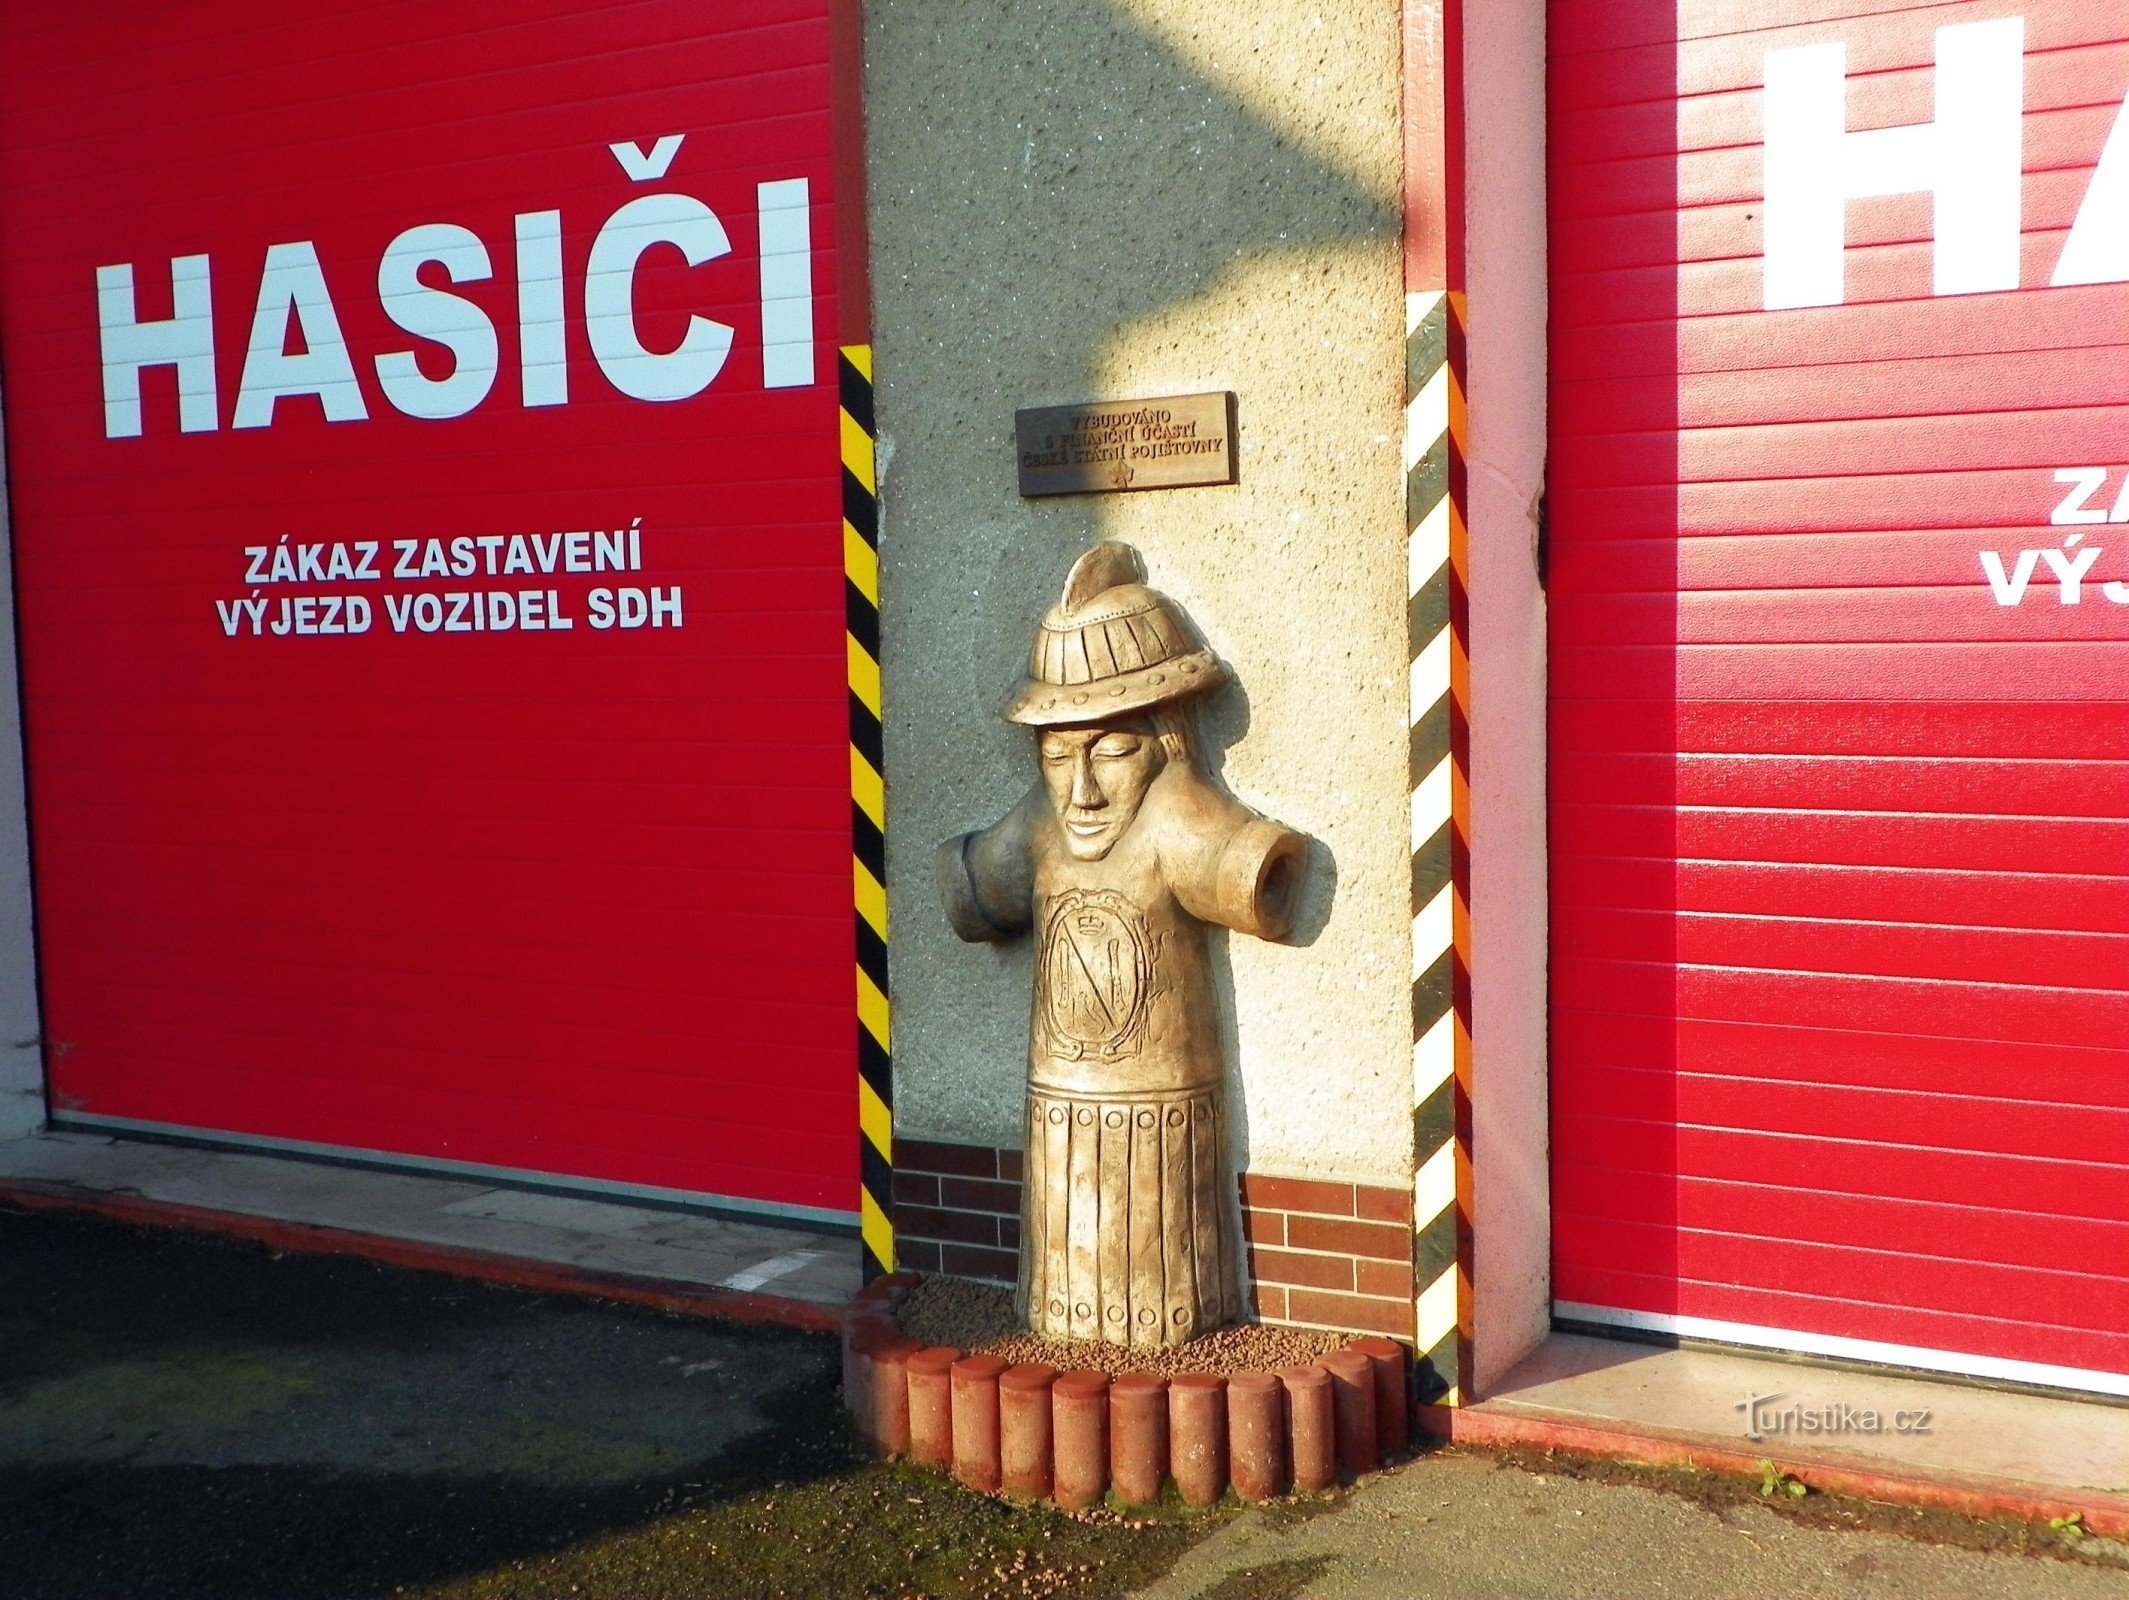 St. Florian – fire hydrant in Nové Město in Moravia